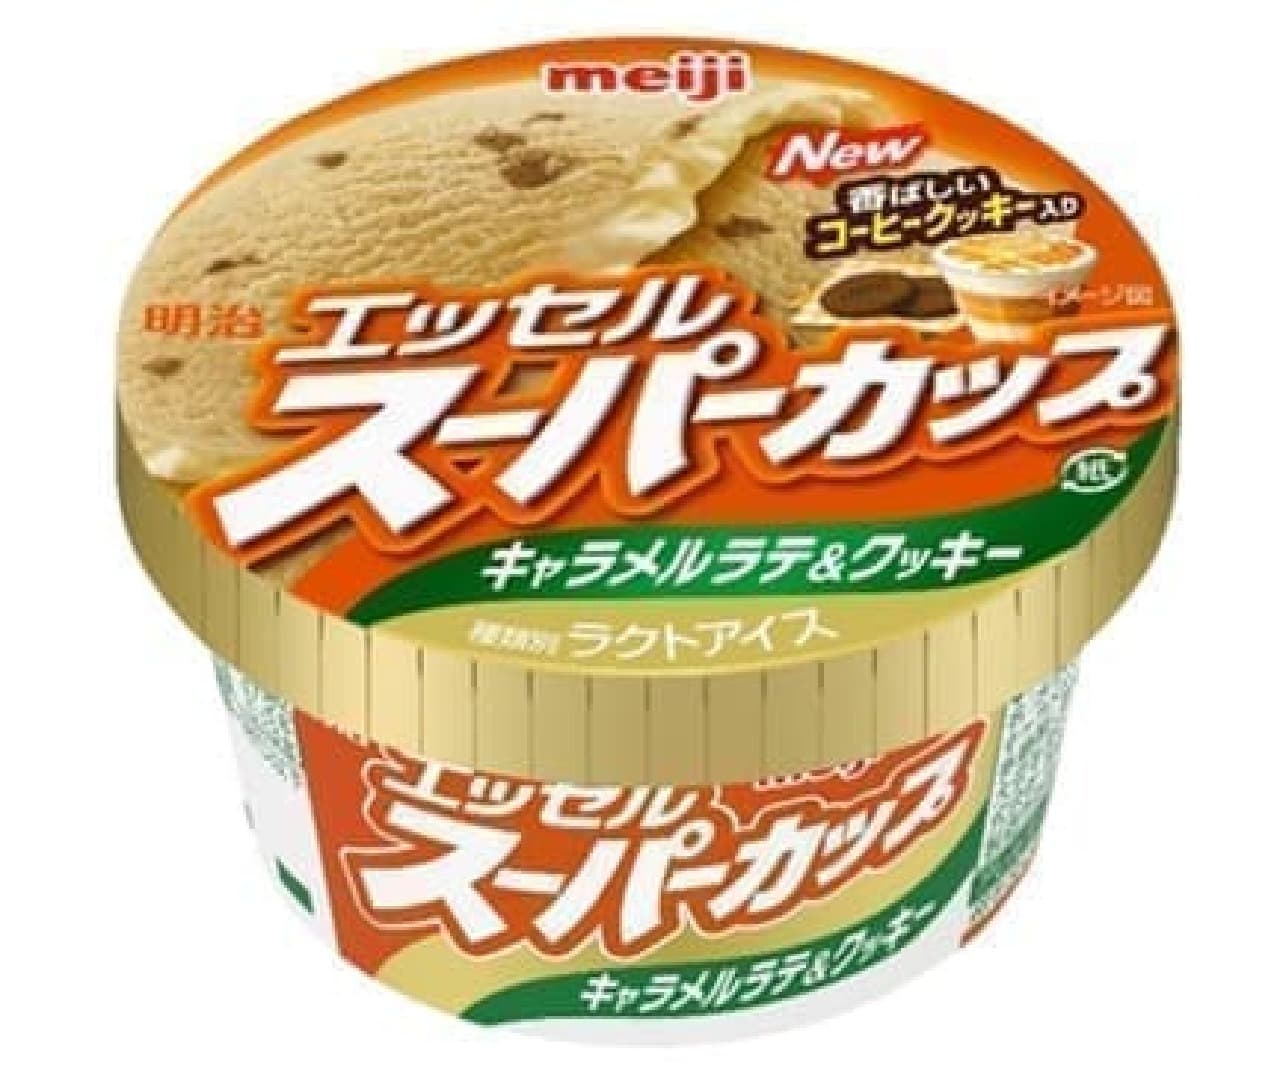 Meiji Essel Super Cup Caramel Latte & Cookies